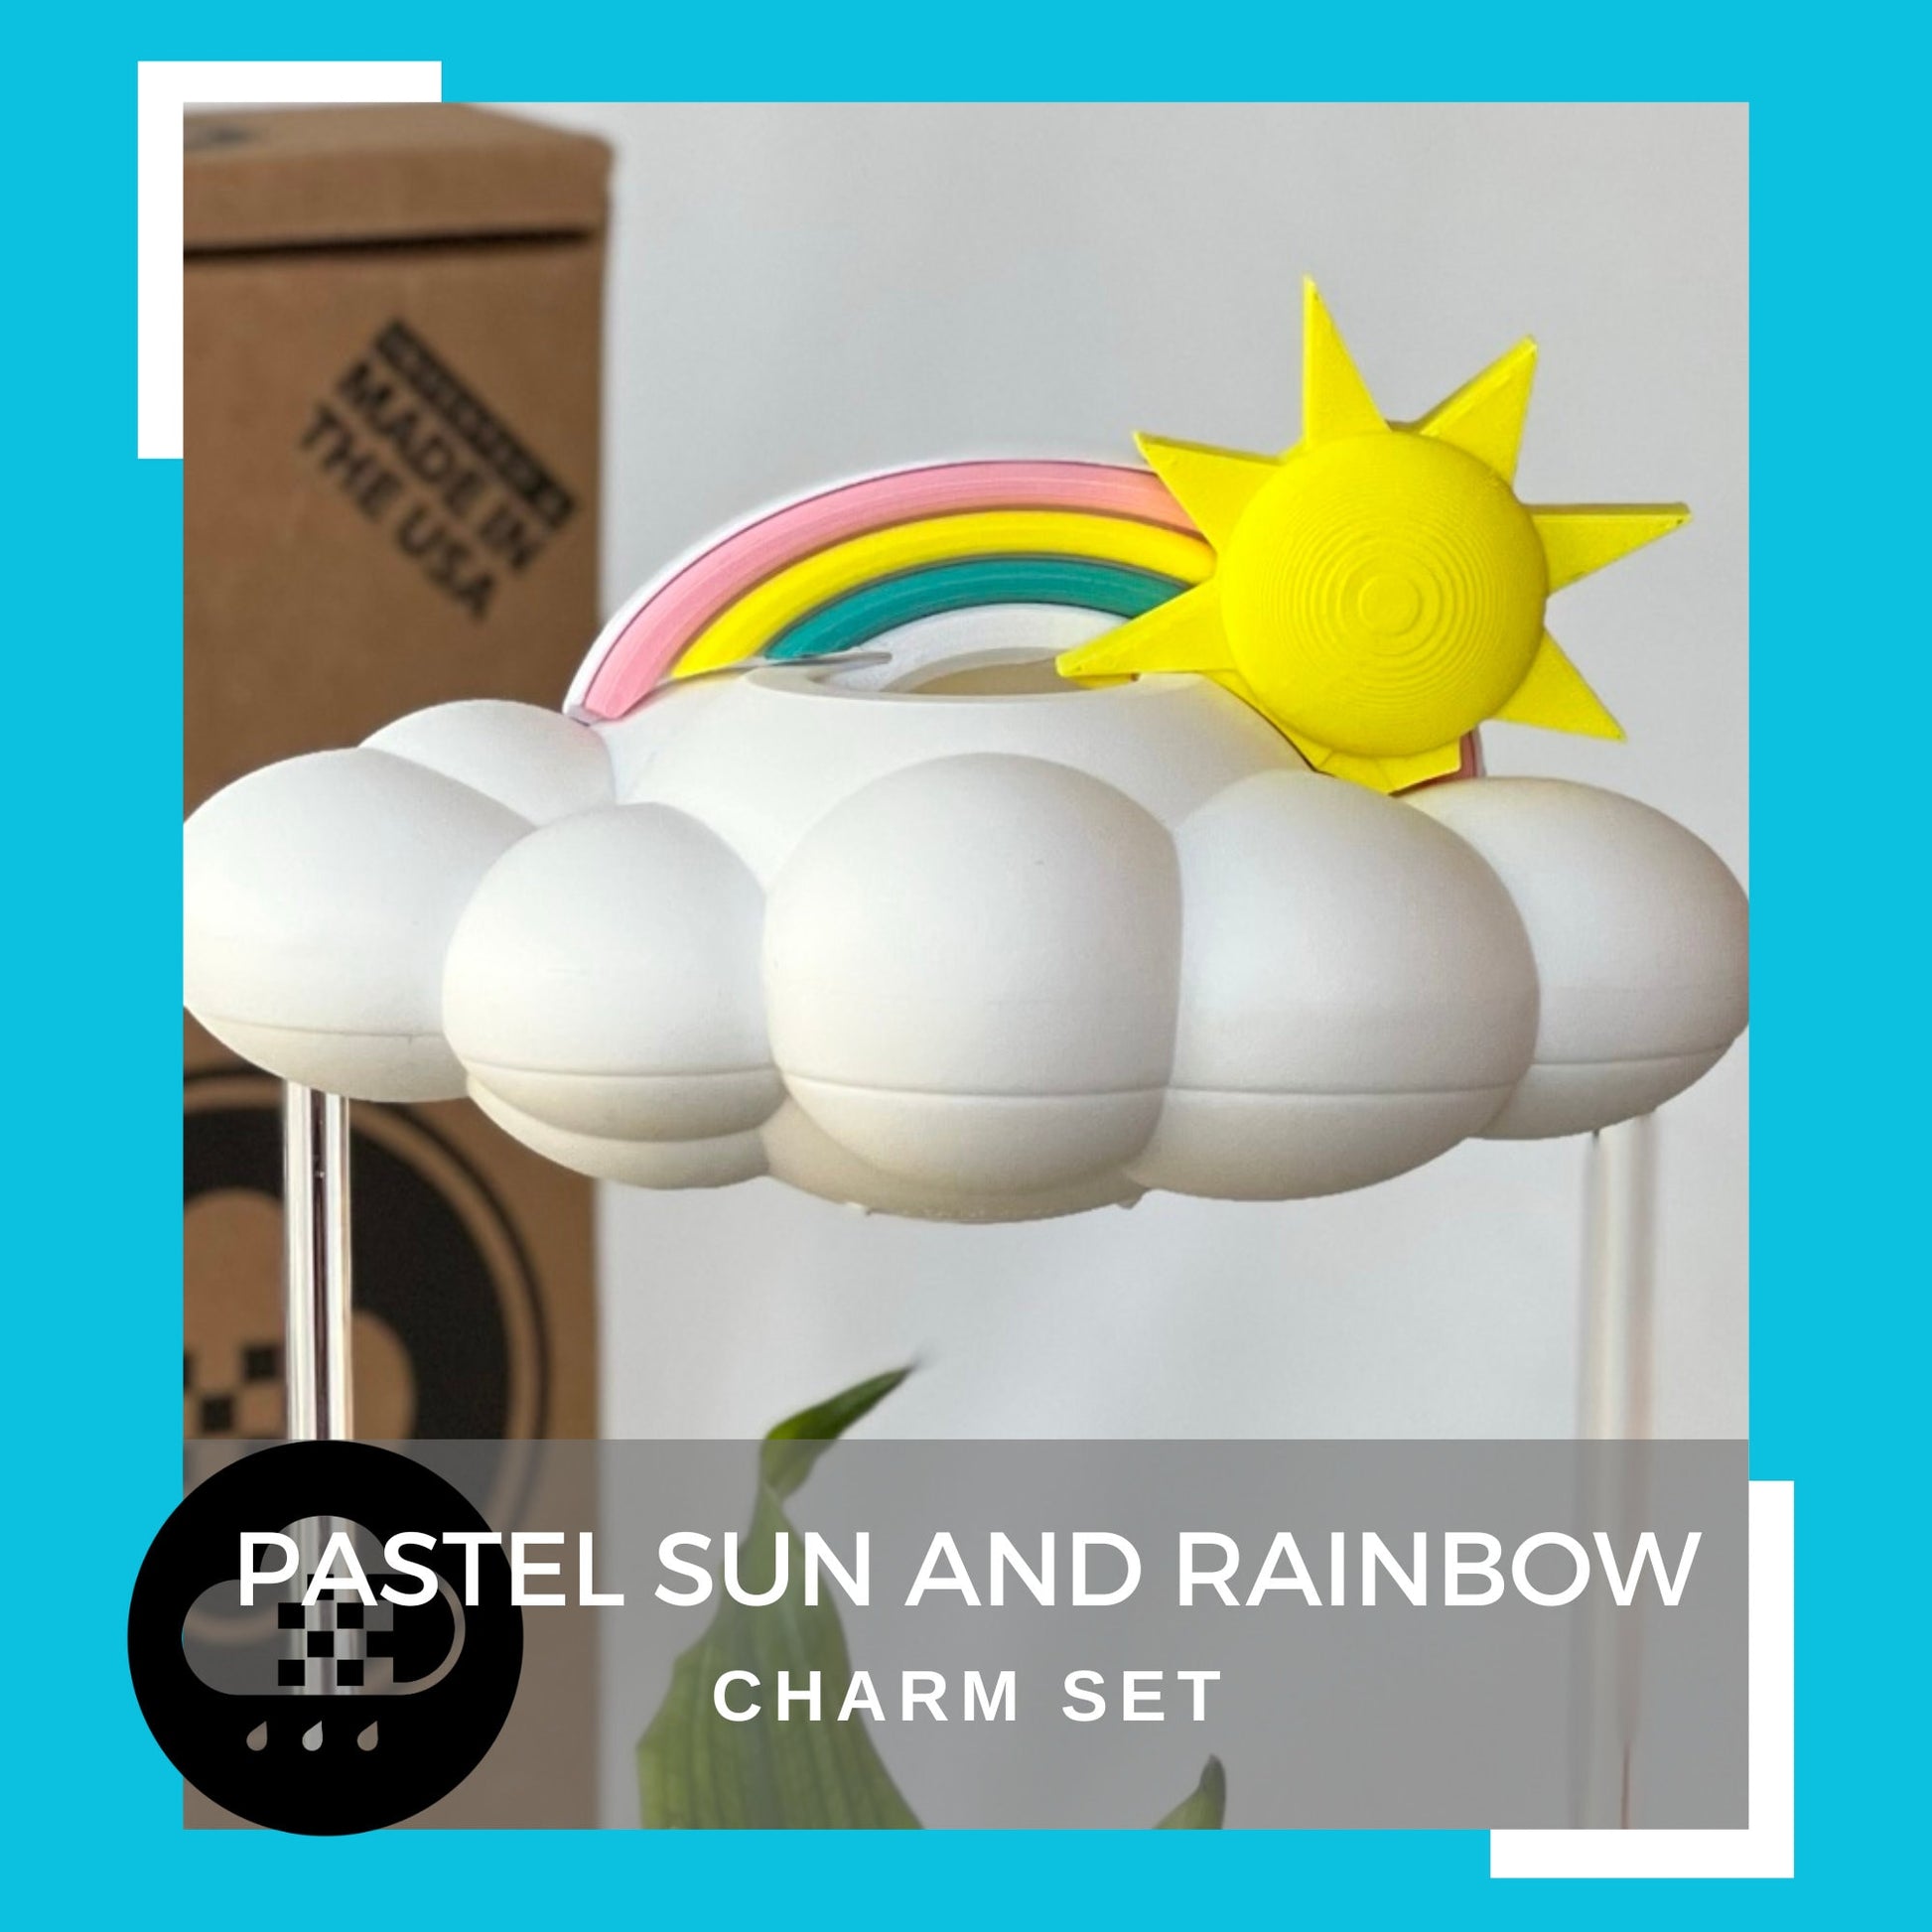 Sun and Pastel Rainbow Charm set for dripping rain cloud